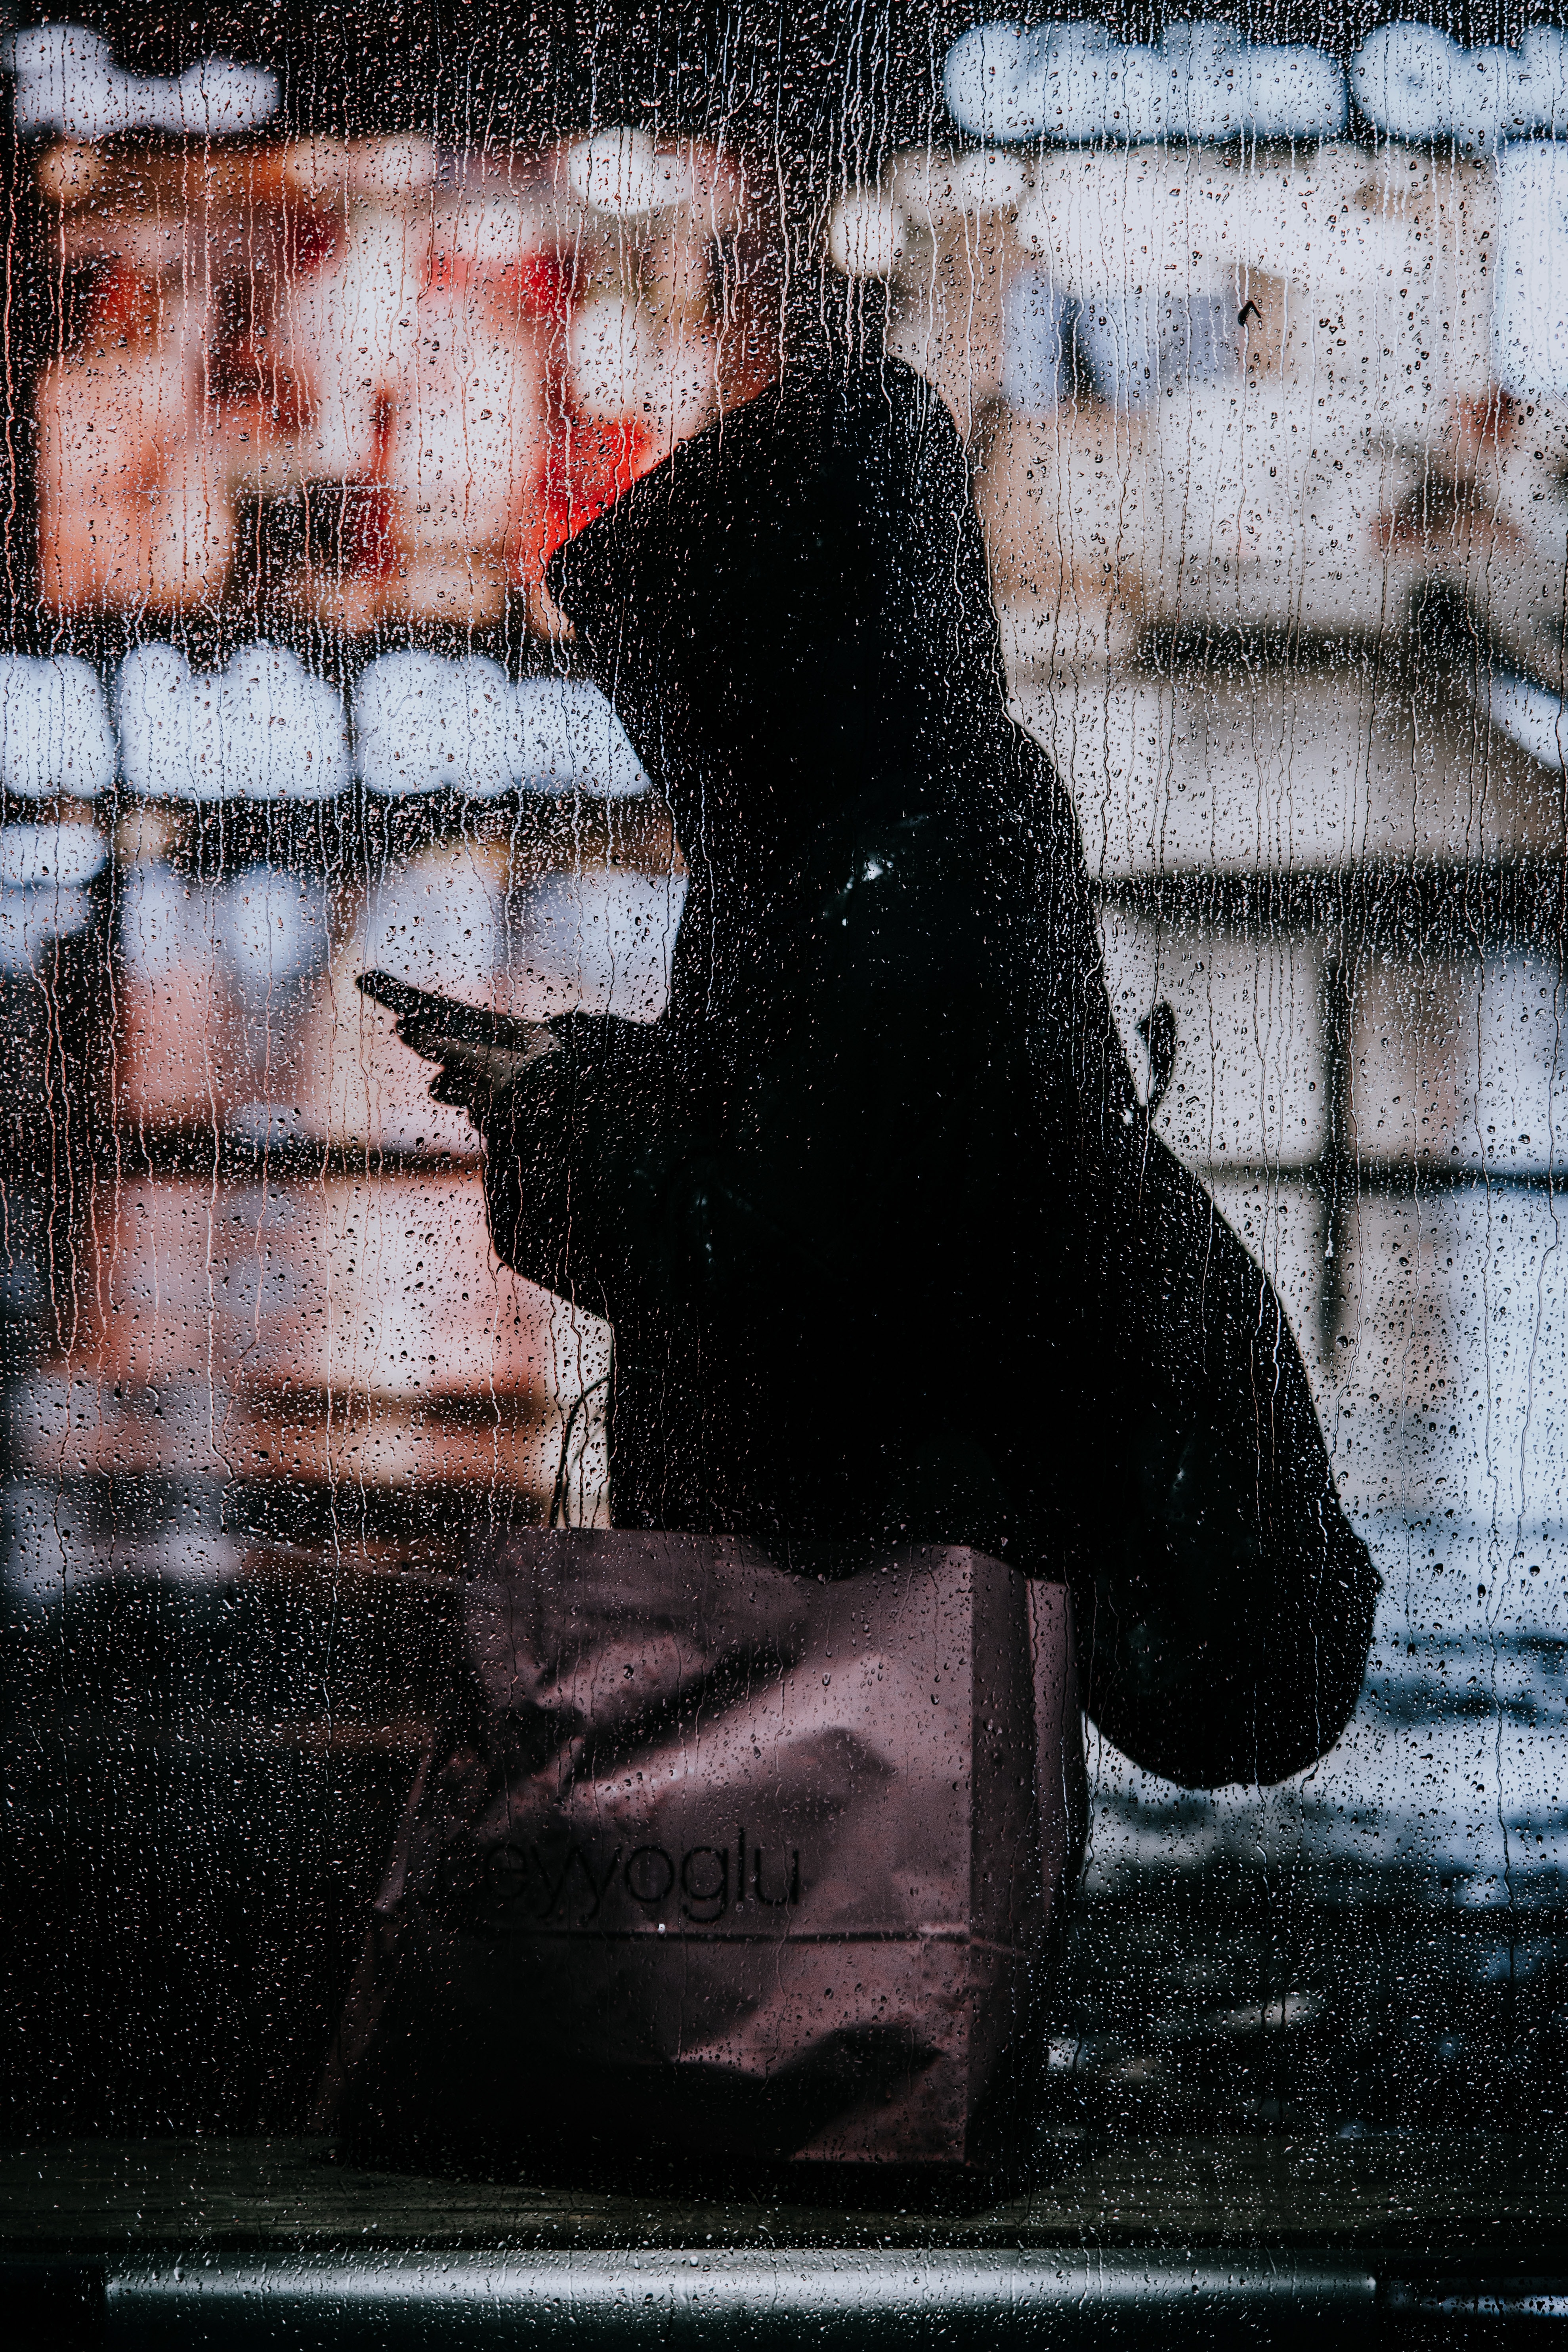 hood, miscellanea, rain, drops, silhouette, miscellaneous cellphone